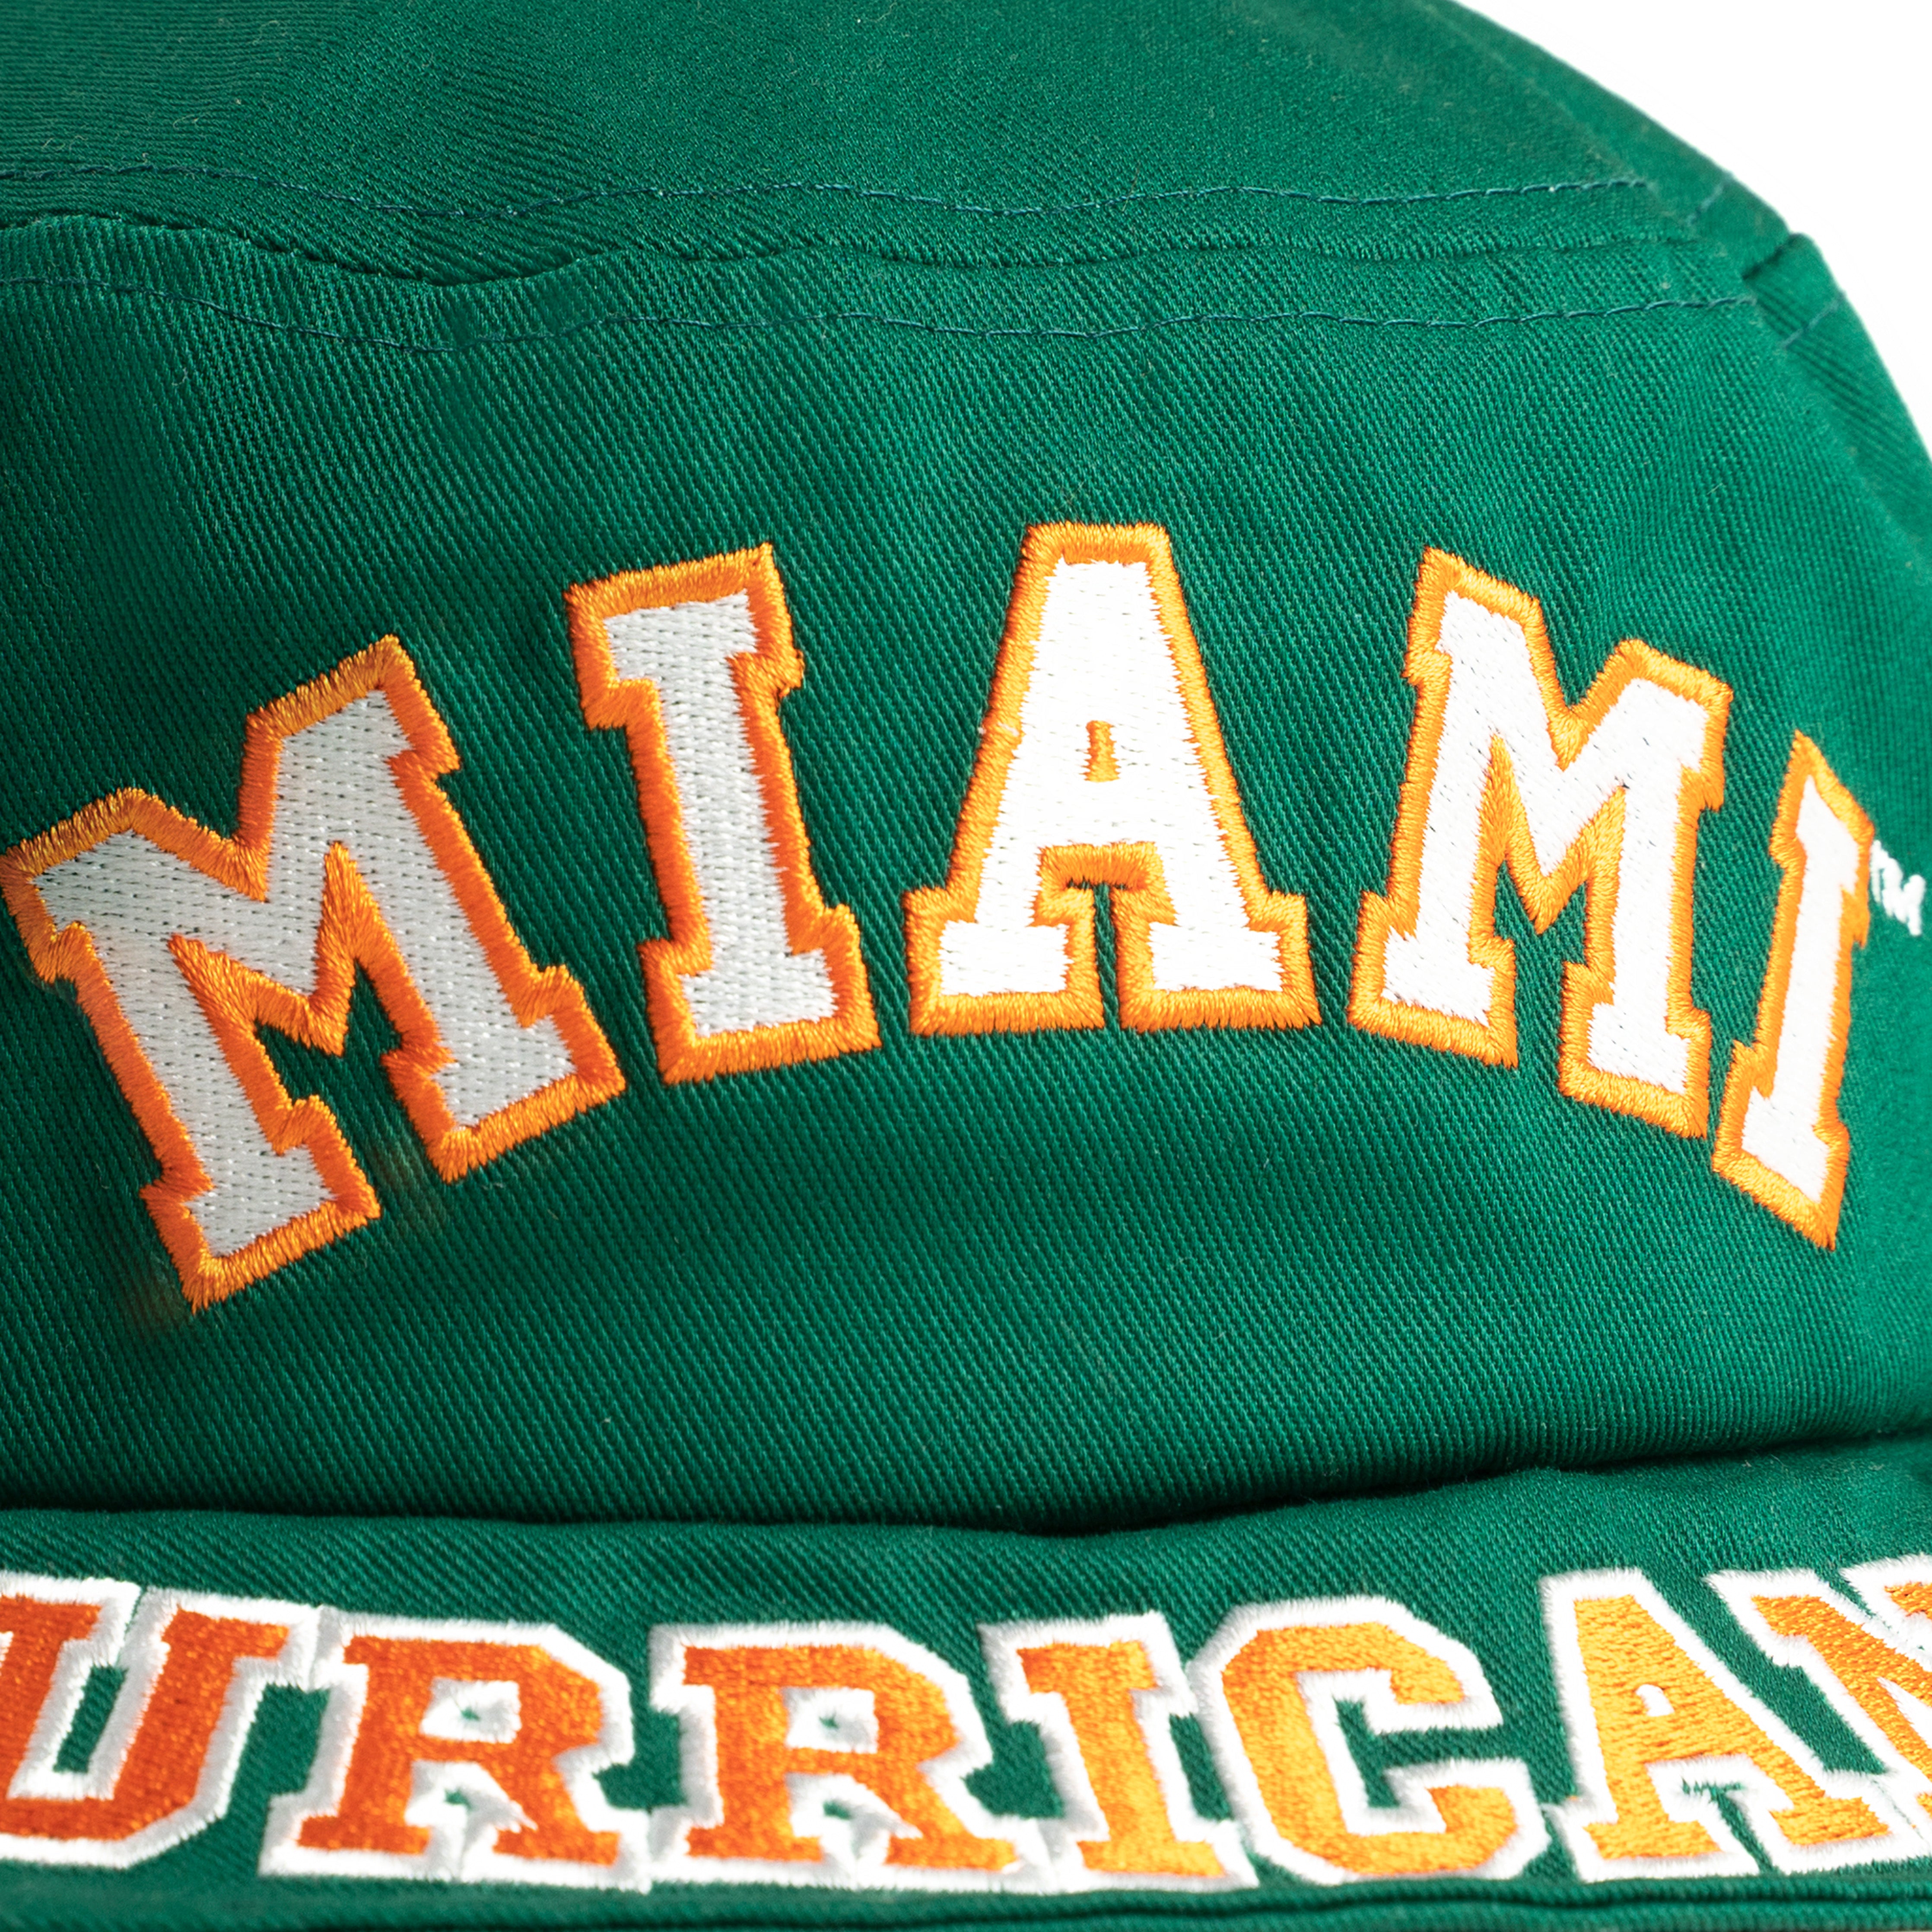 Miami Hurricanes Dyme Lyfe Zubaz Sebastian Zebra Snapback Hat